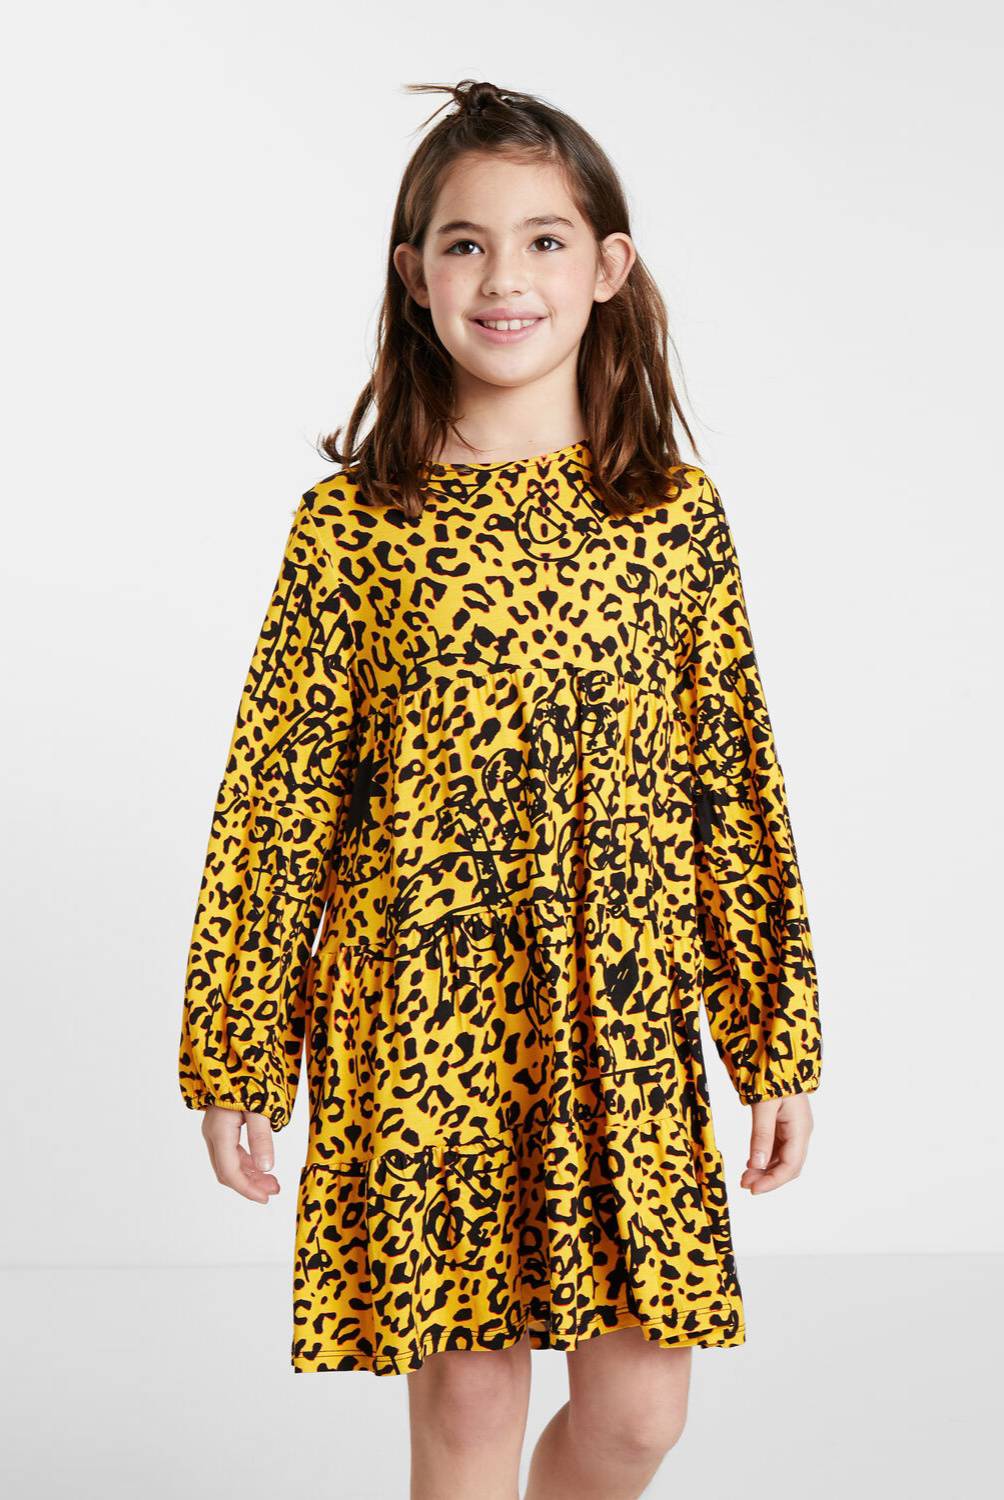 Desigual Desigual Vestido Trapecio Leopardo Niña Niña 